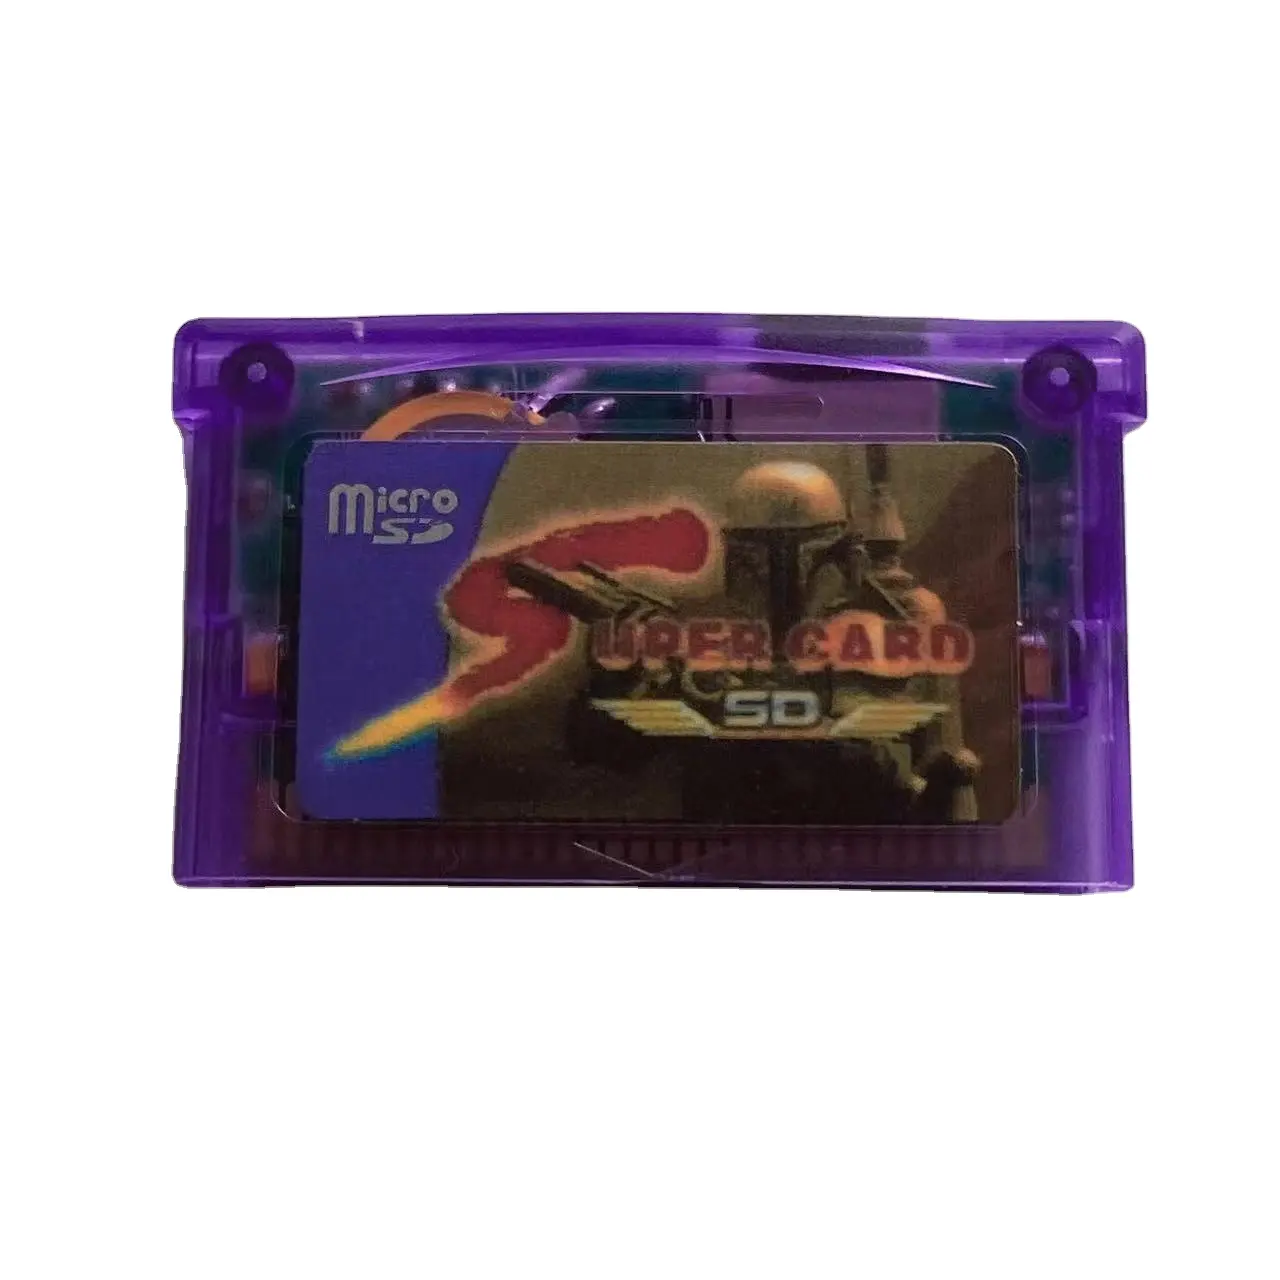 Flashcard für GBA SD Super Card für GBA Game Boy Advance Spiele